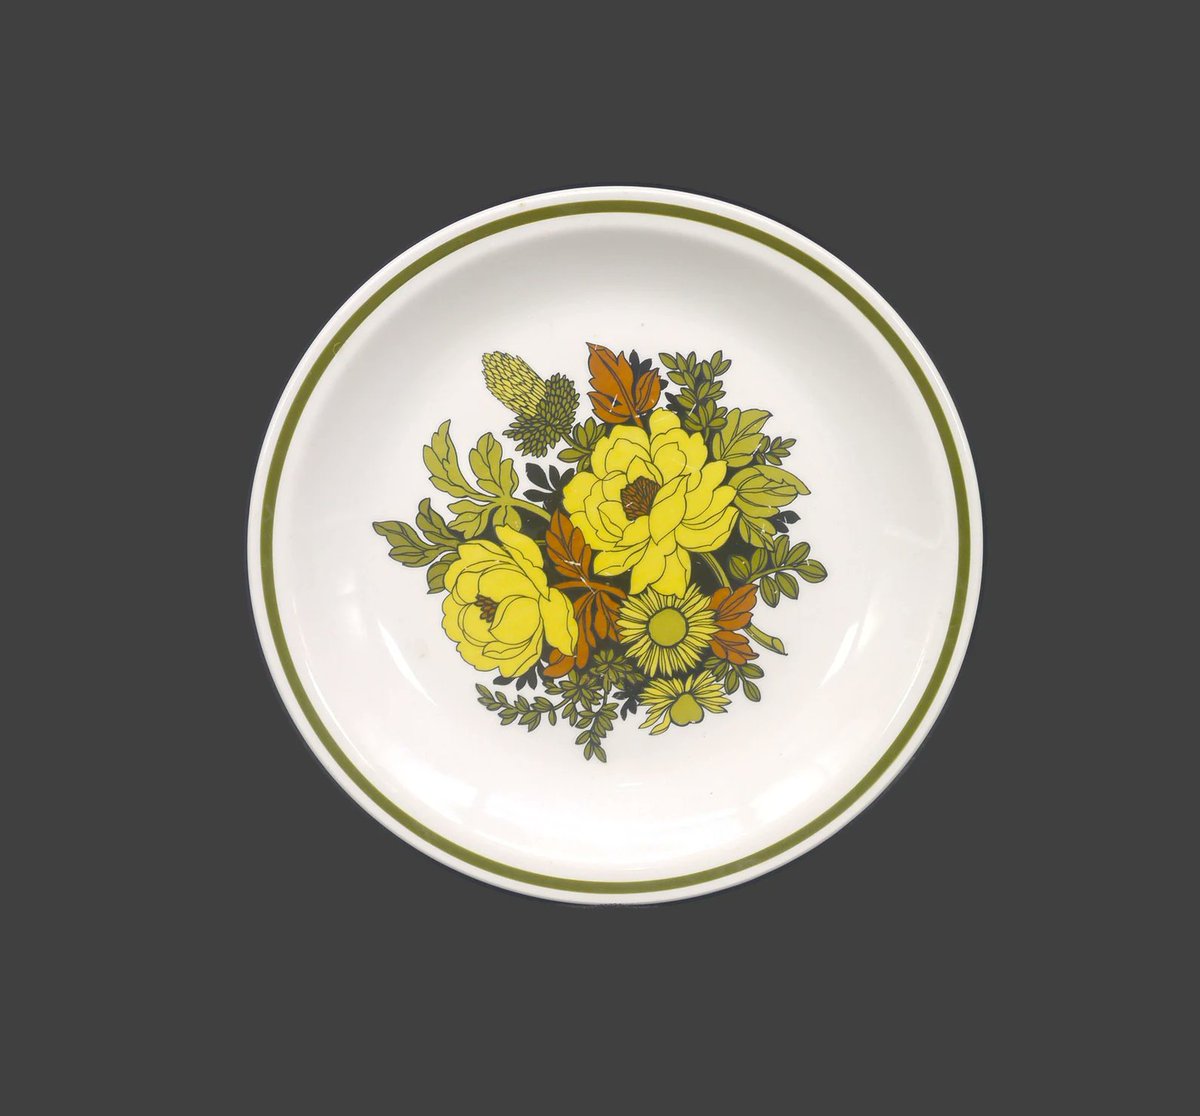 Retro Grindley Mayflower dinner plate. Satin White ironstone made in England. etsy.me/3UQRG8E via @Etsy #BuyfromGroovy #antiqueshop #tableware #dinnerware #tabledecor #1970skitchen #retrotableware #Grindley #GrindleyMayflower #flowerpower #Mayflower #EtsySellers